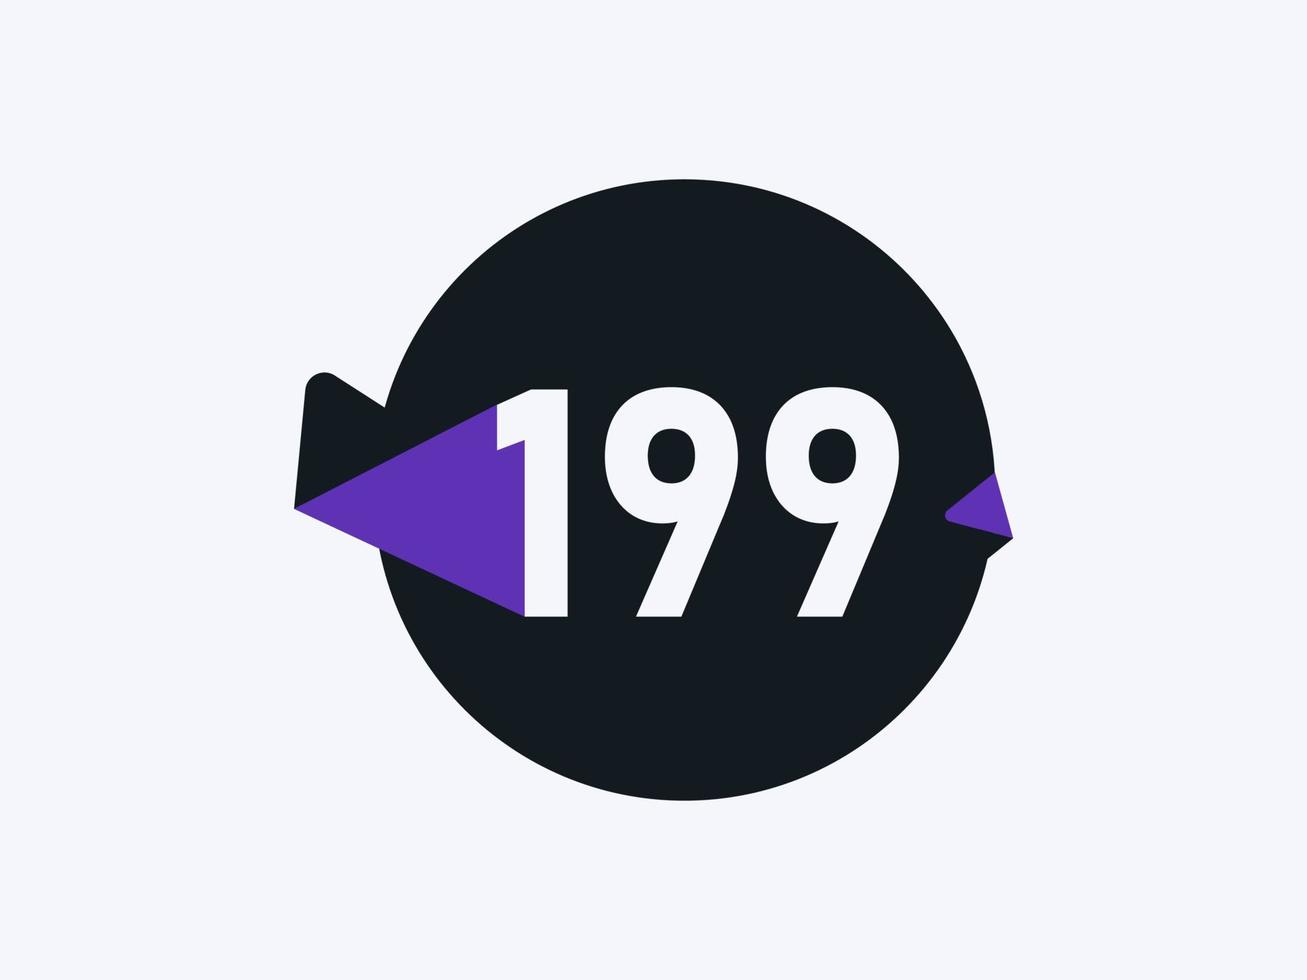 199 Number logo icon design vector image. Number logo icon design vector image